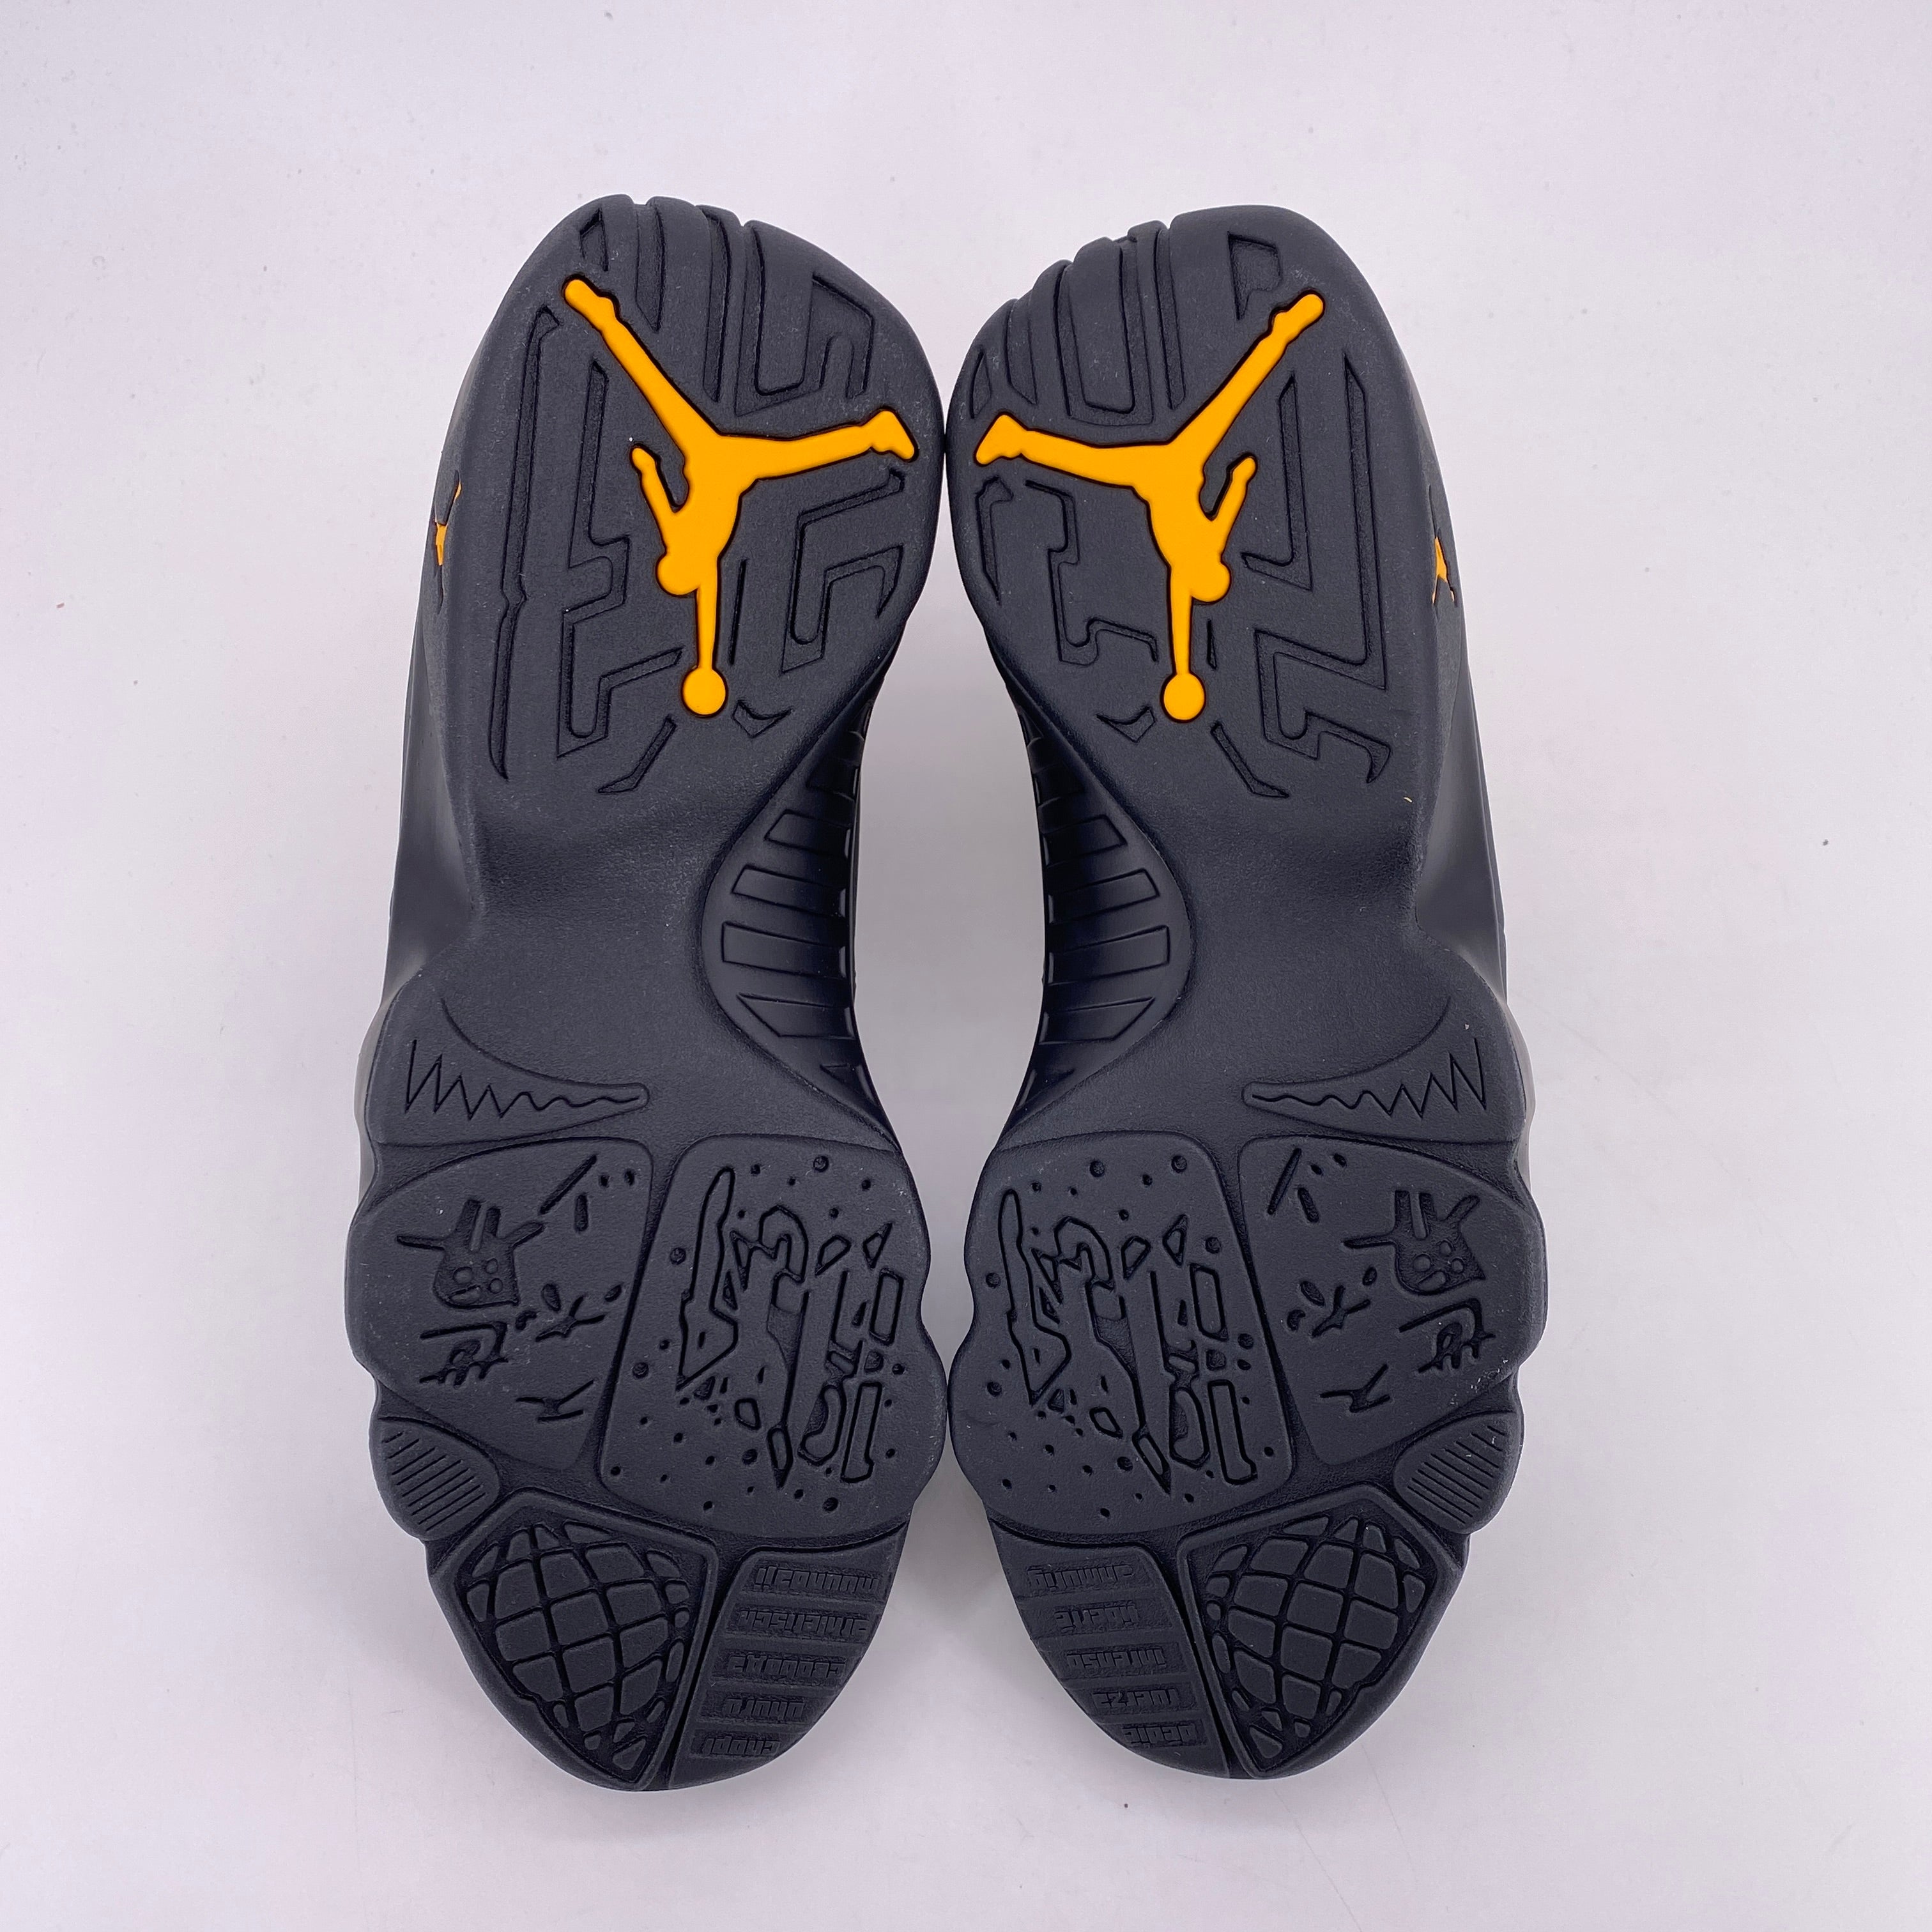 Air Jordan 9 Retro "University Gold" 2020 New Size 11